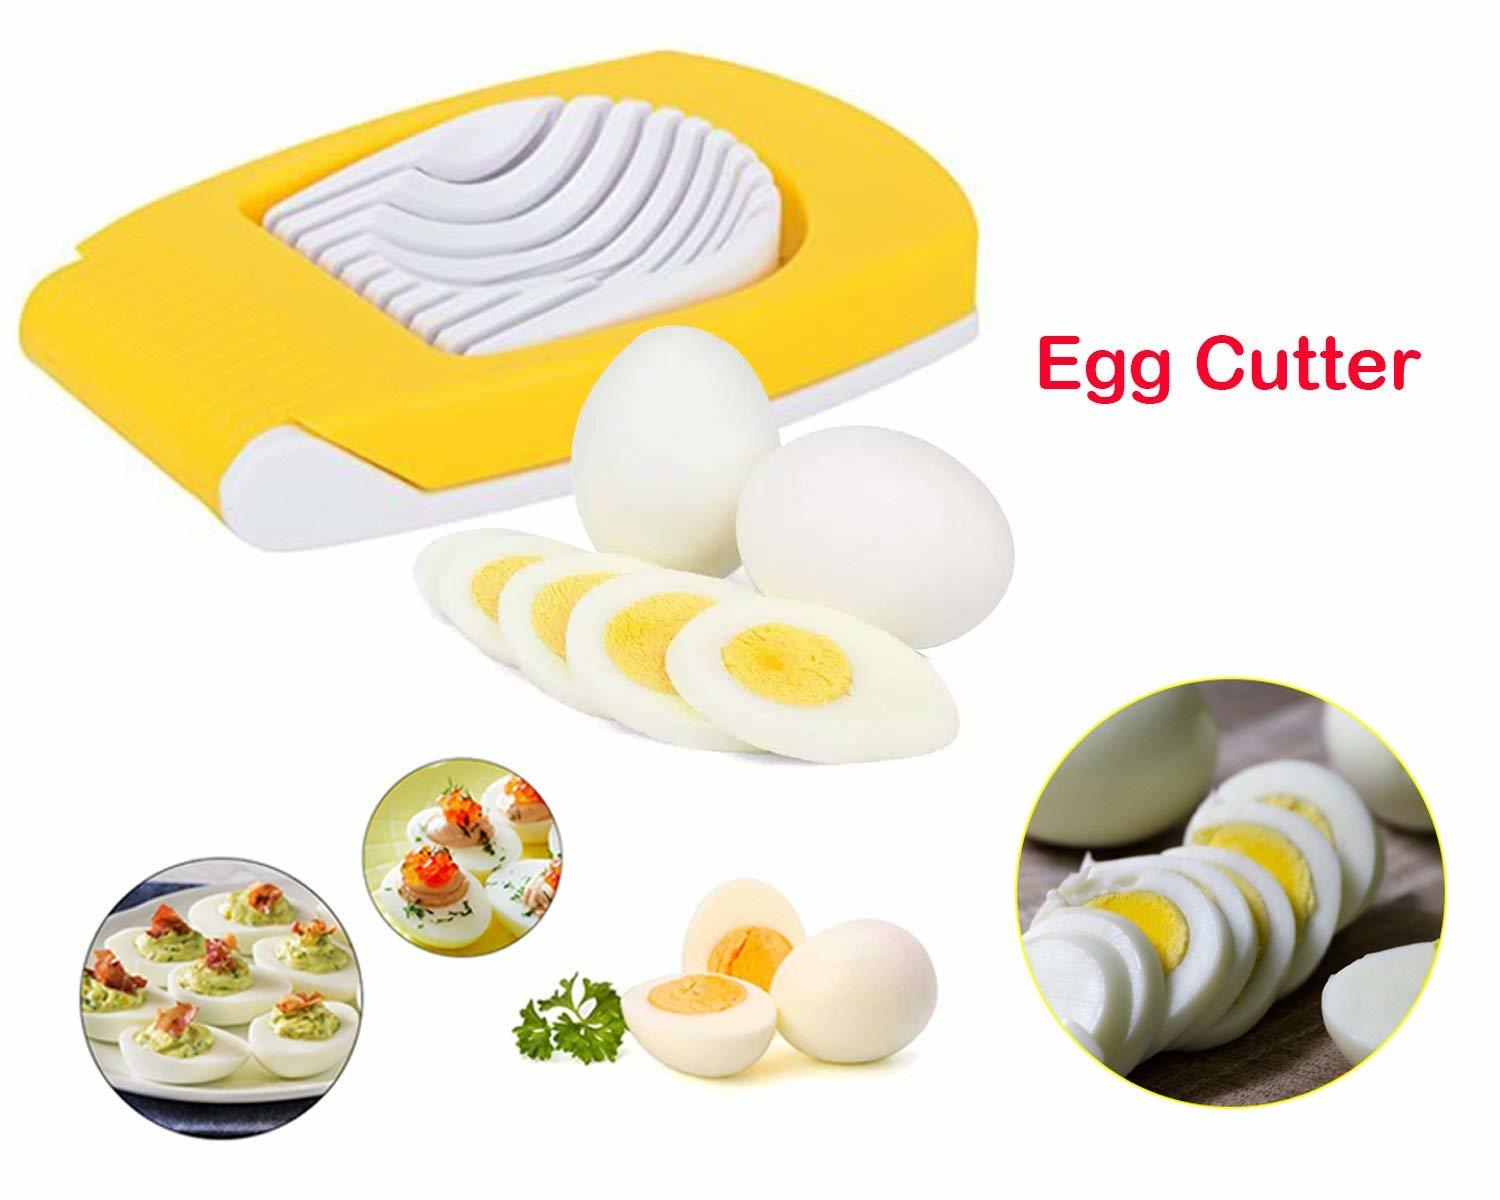 Egg Cutter, Egg Slicer, Boiled Eggs Cutter, Stainless Steel Cutting Wires, Multi Purpose Slicer | Egg Cutter for Hard Boiled Eggs | Egg Cutter Slicer